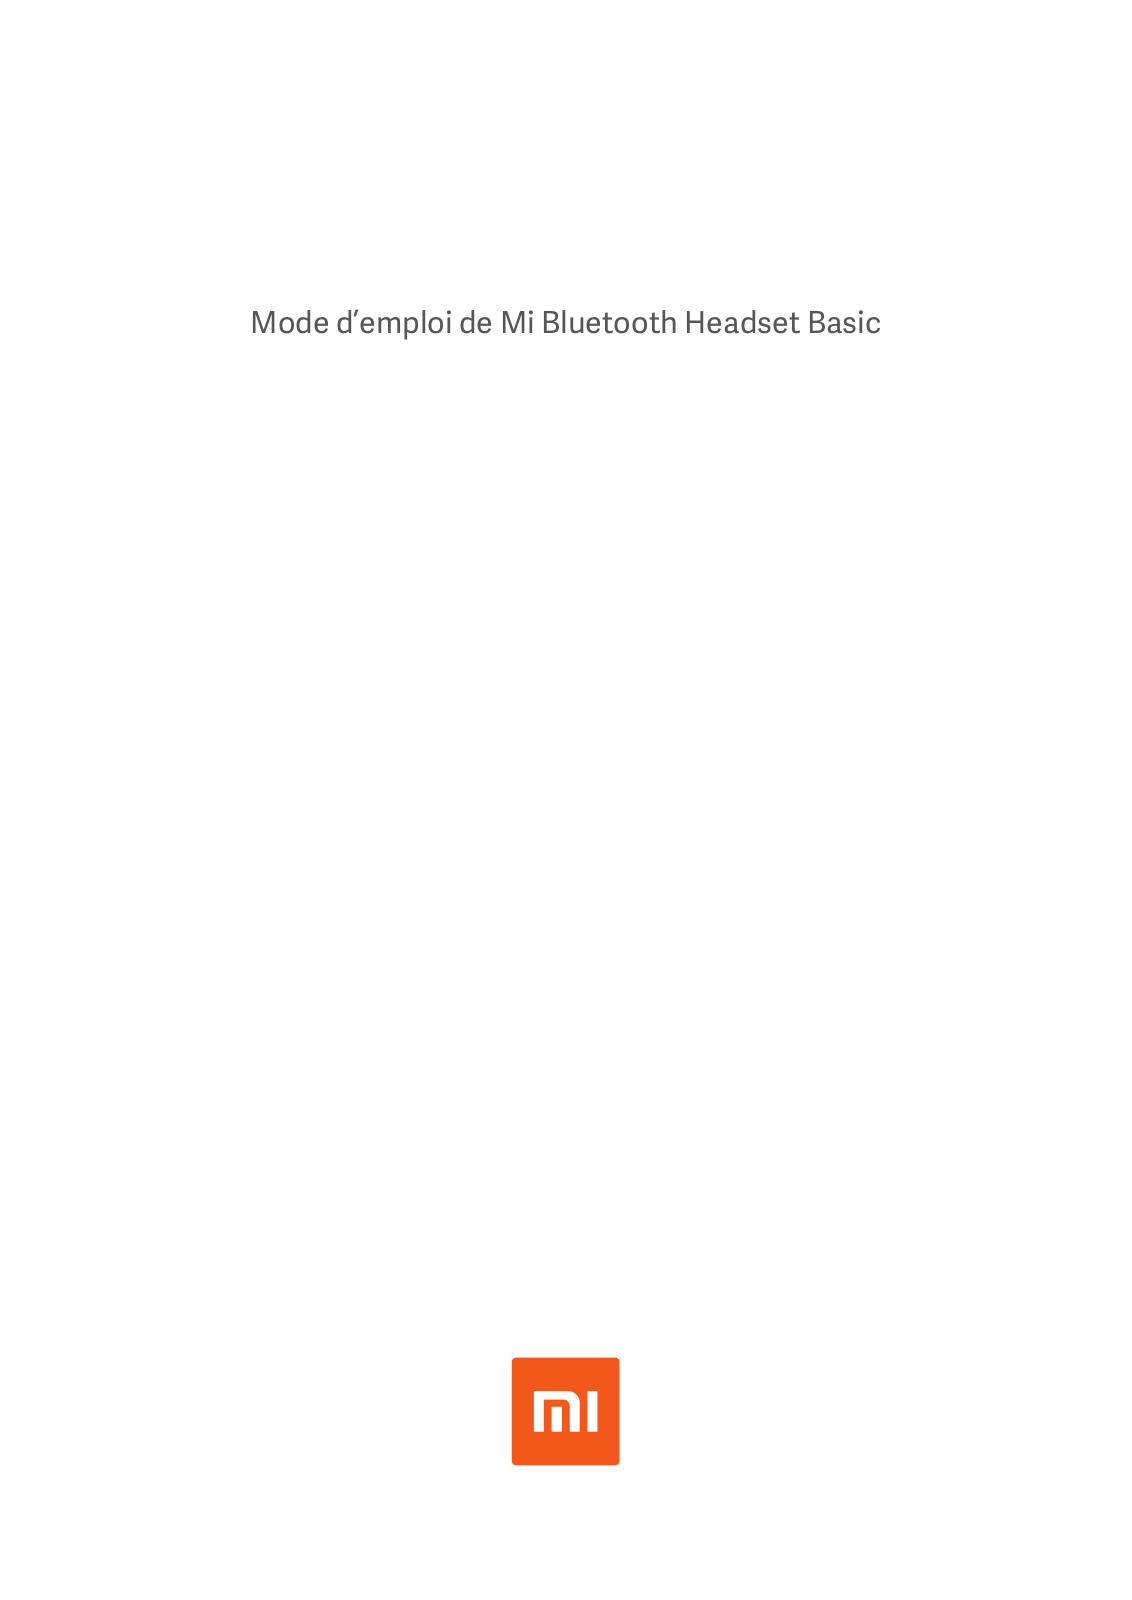 XIAOMI Mi Bluetooth Headset Basic Mode d’emploi